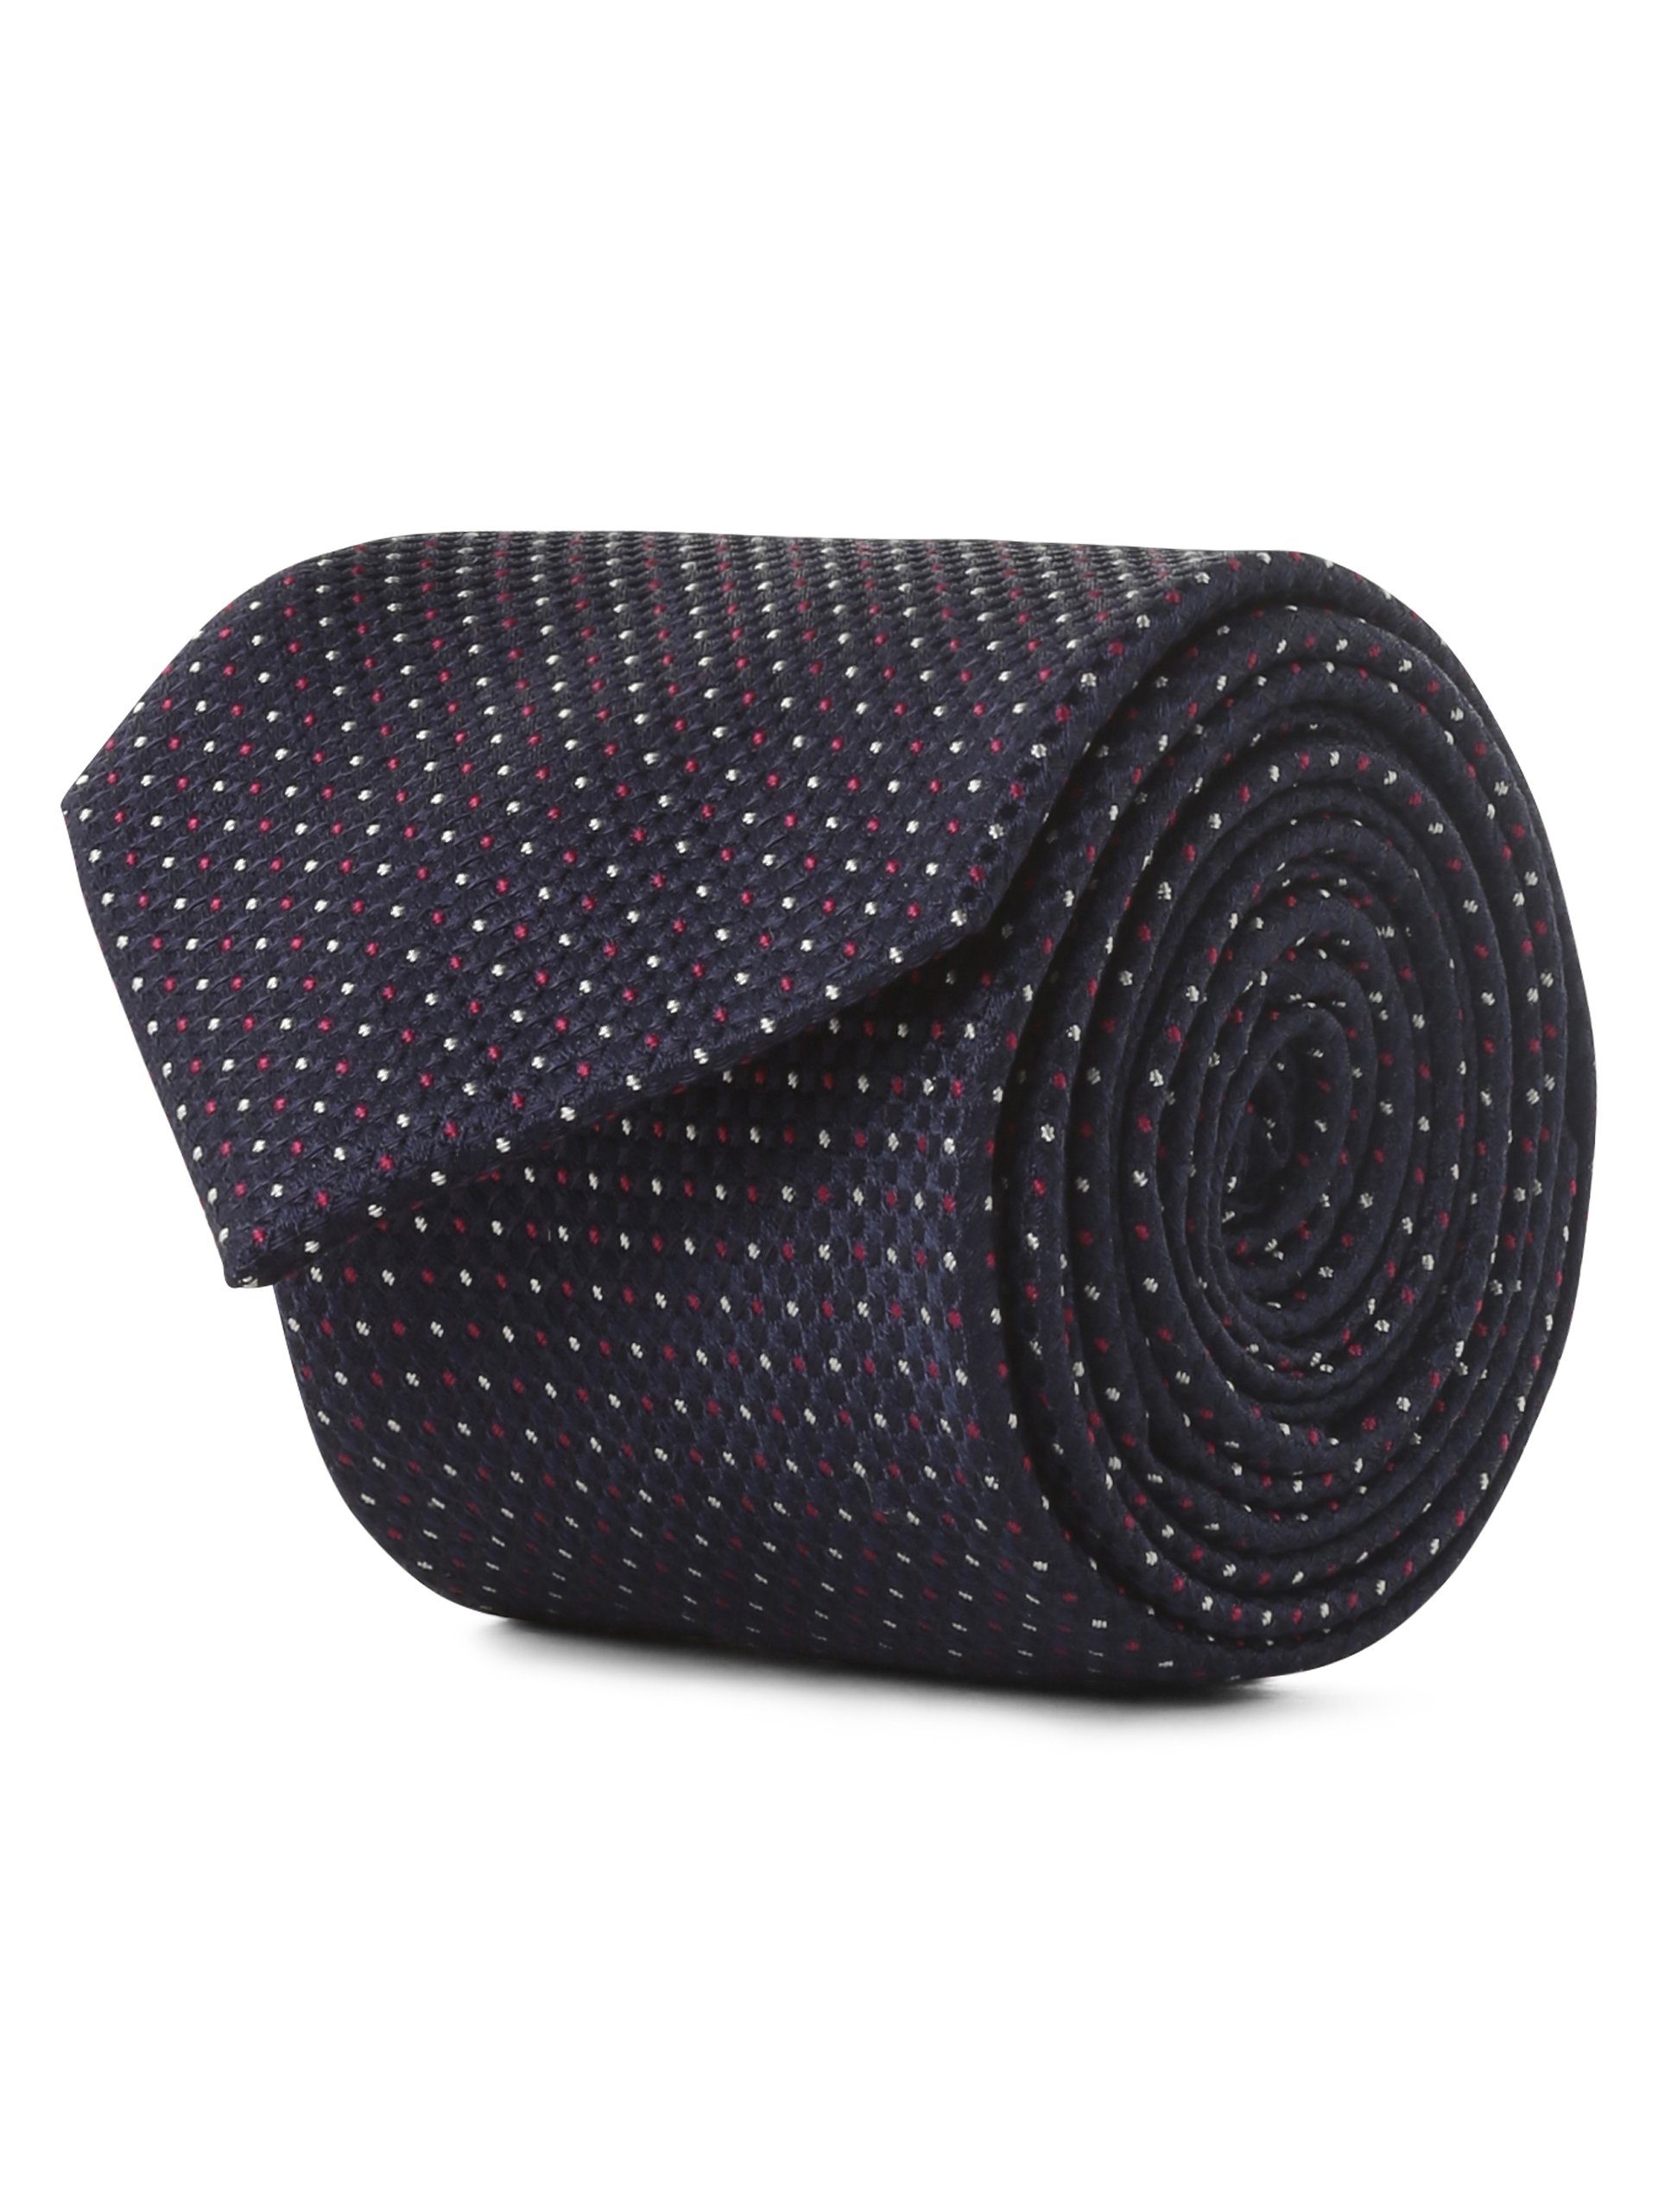 Krawatte Andrew James